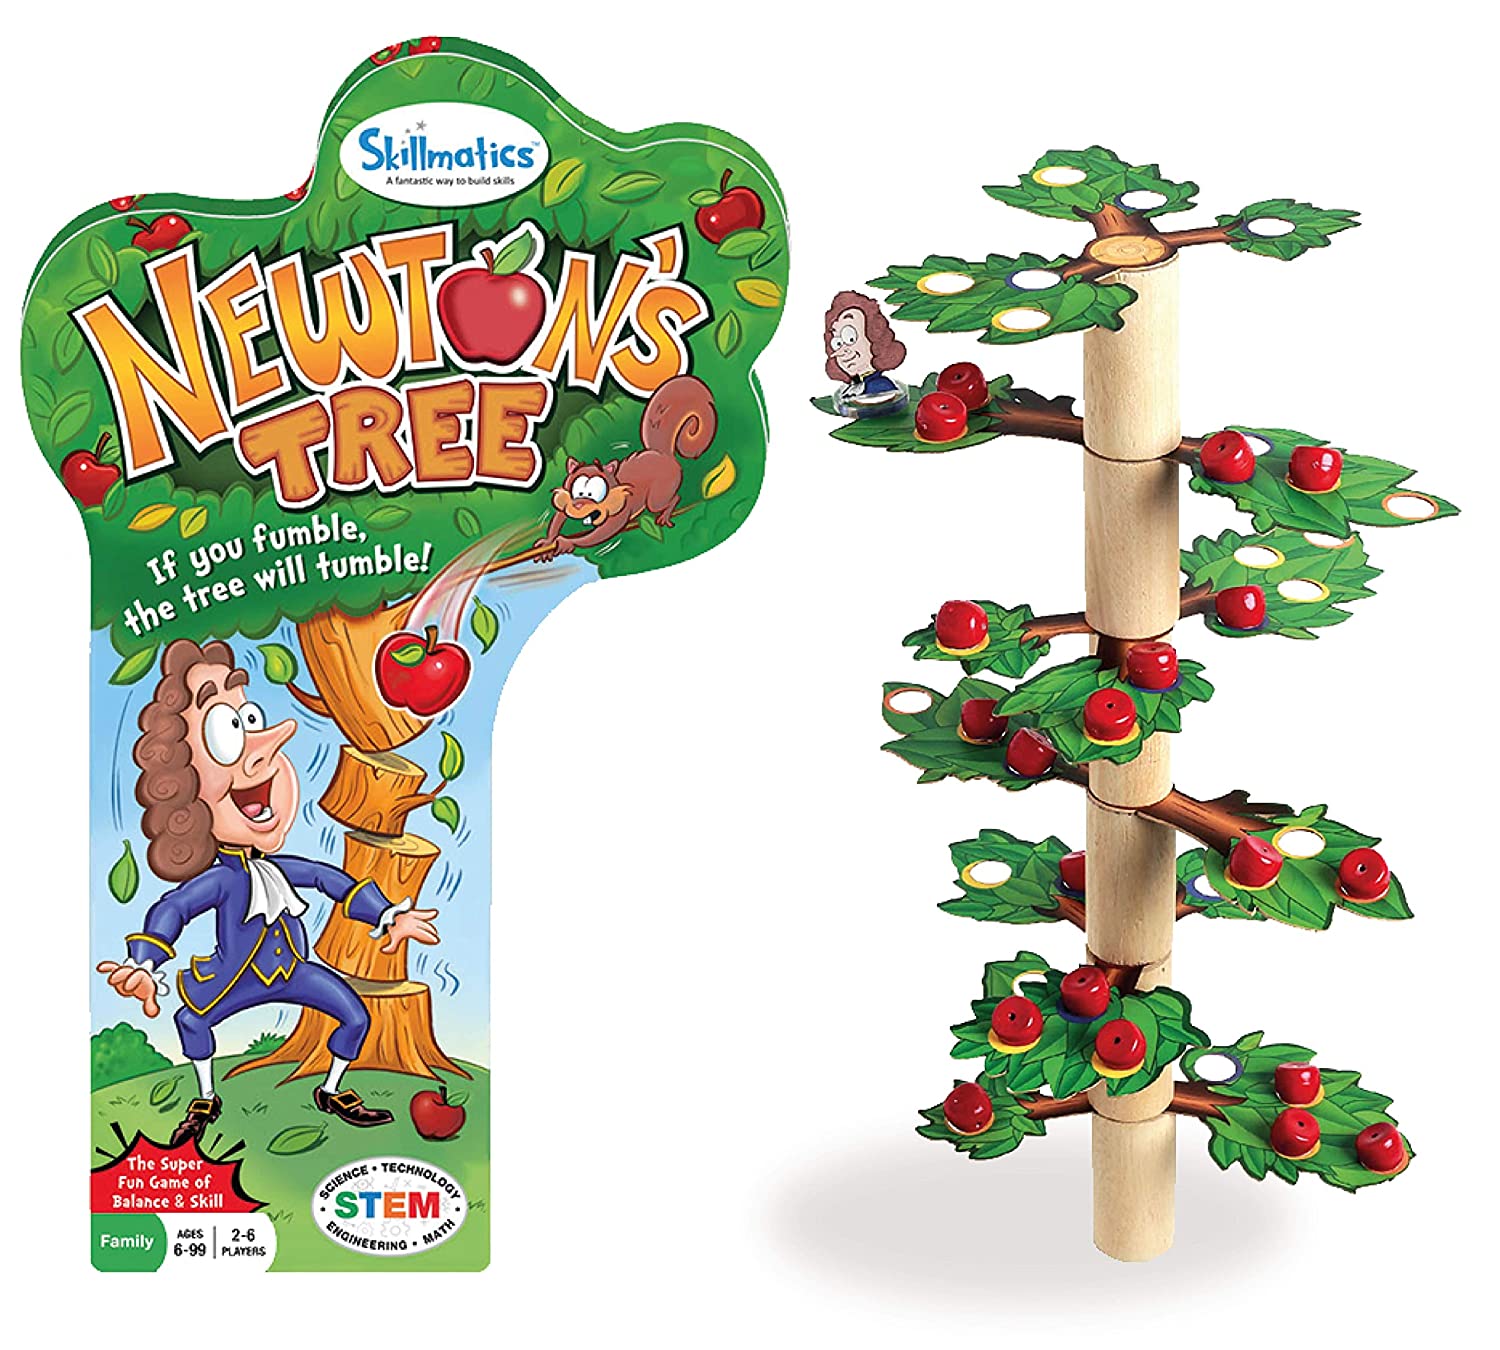 Newtons Tree